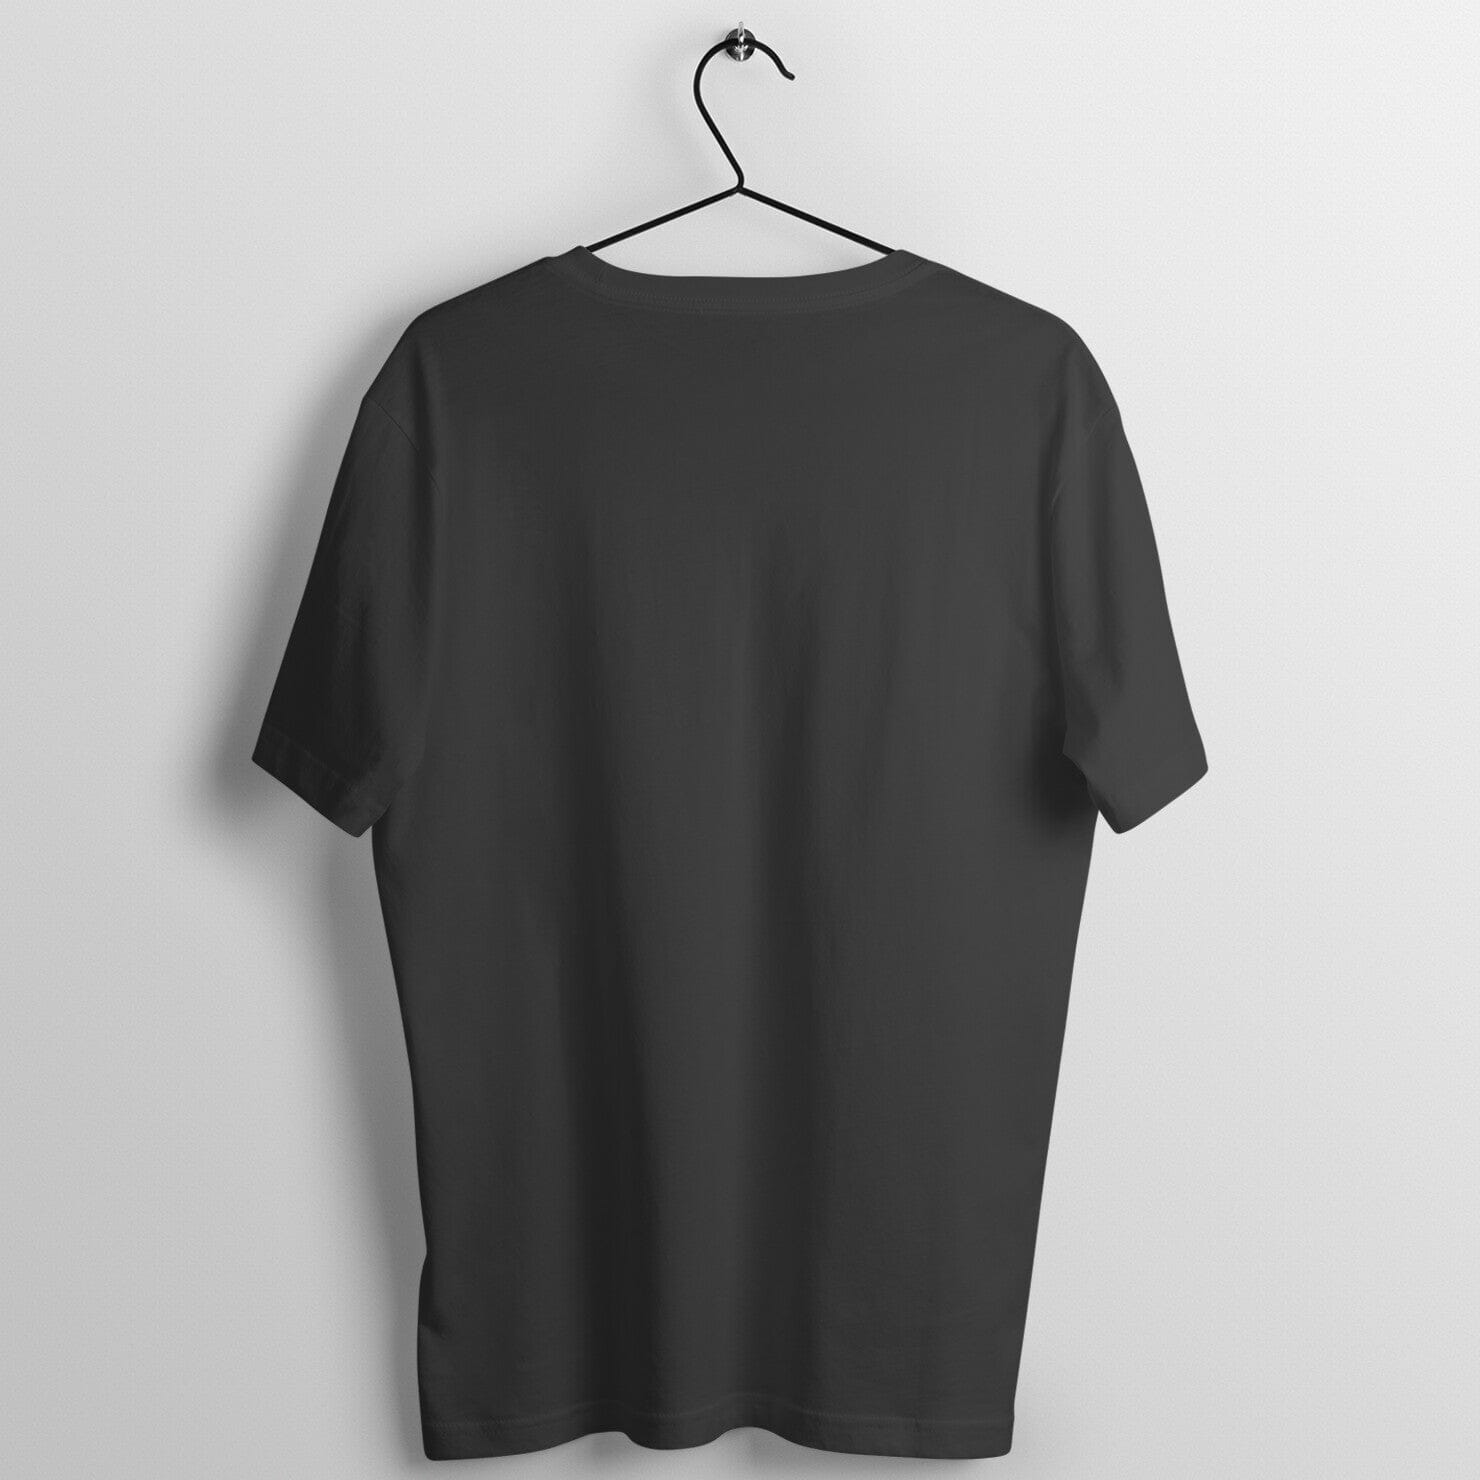 Sanatan Hi Satya Hai Exclusive Black T Shirt for Men and Women Printrove 